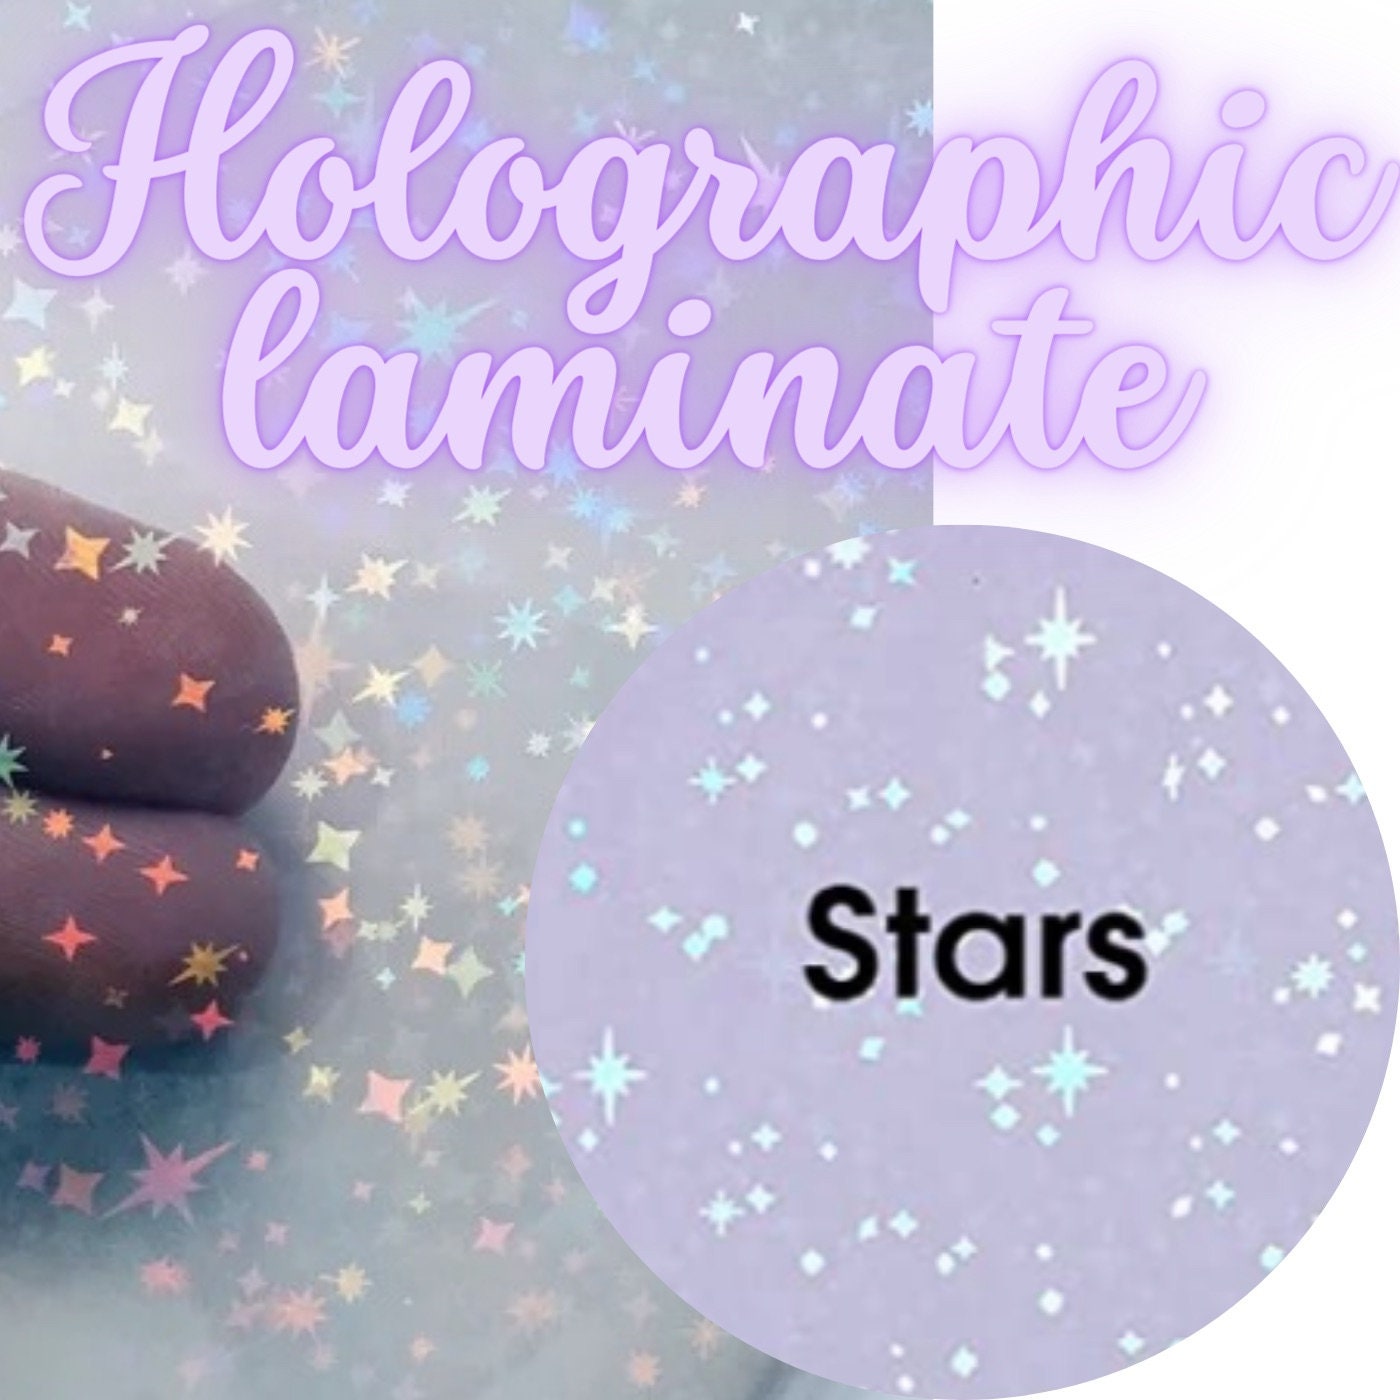 Snowflake Cold Laminate Holographic Laminate (A4 Sheets)